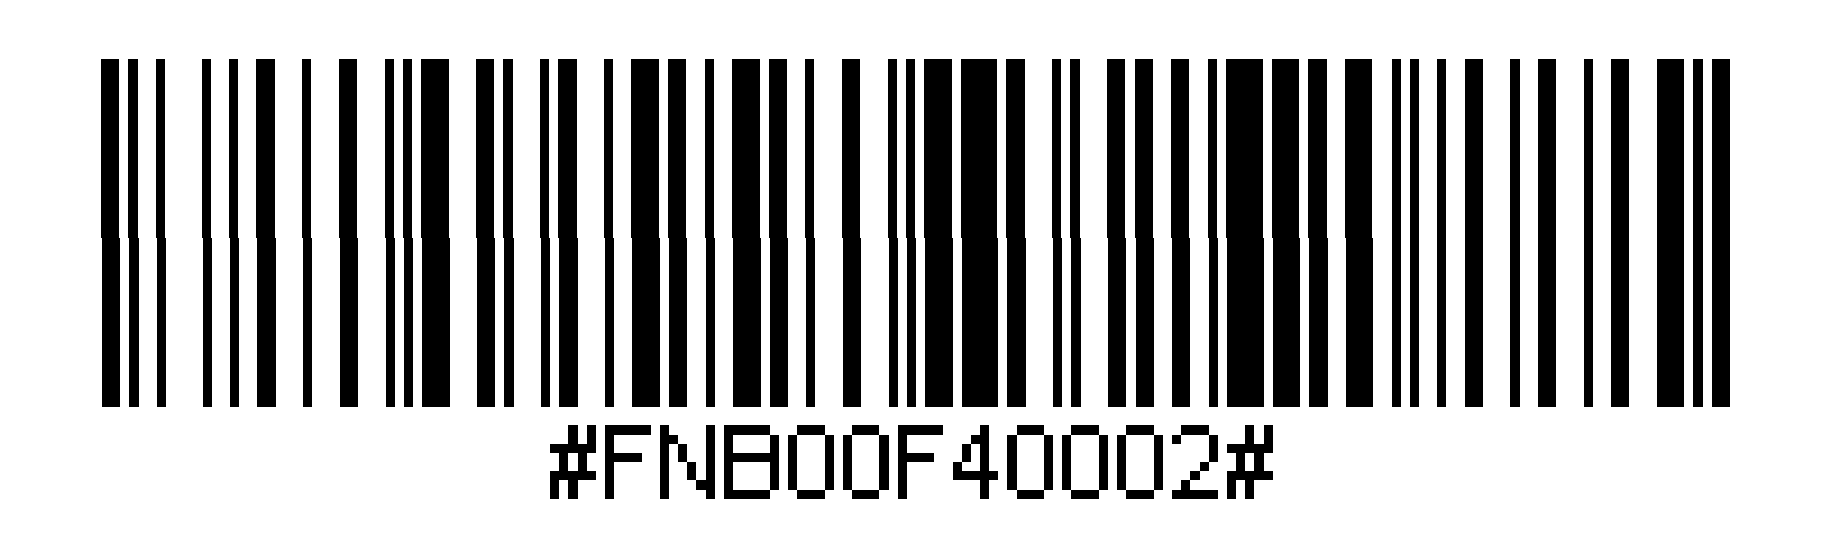 Socketmobile_S700_barcode.png